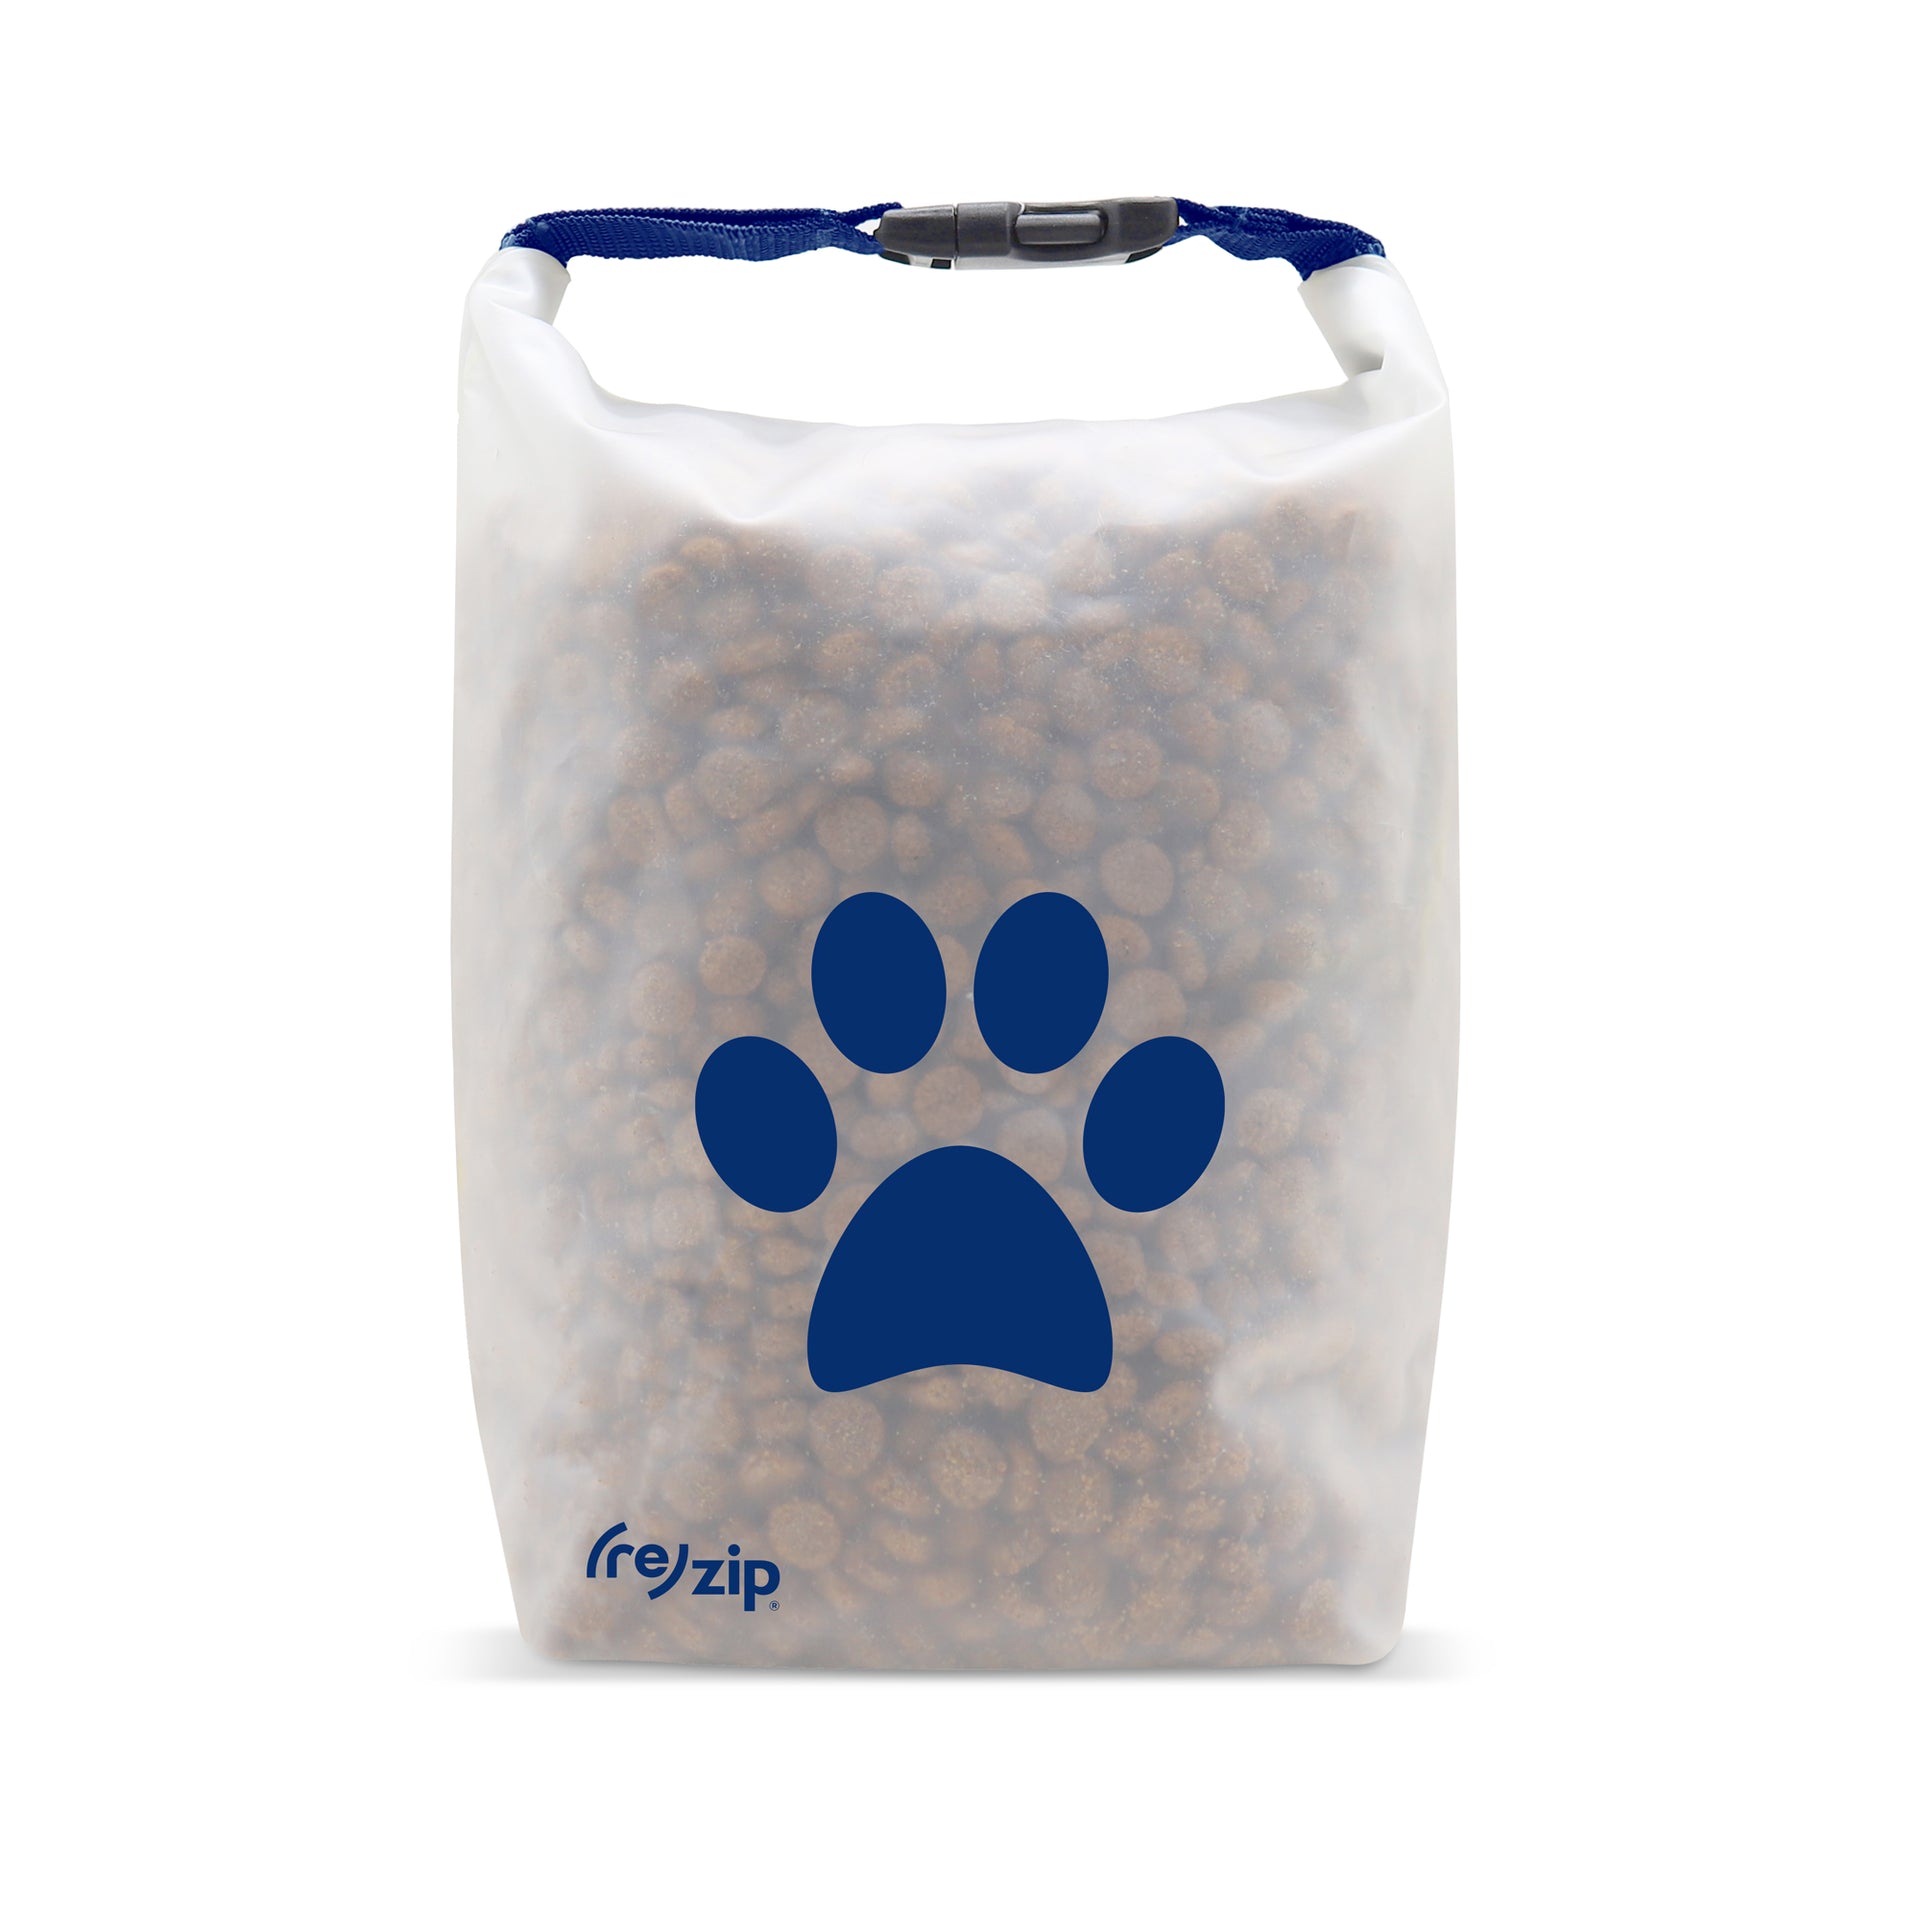 14-cup reusable pet food storage bag in cobalt